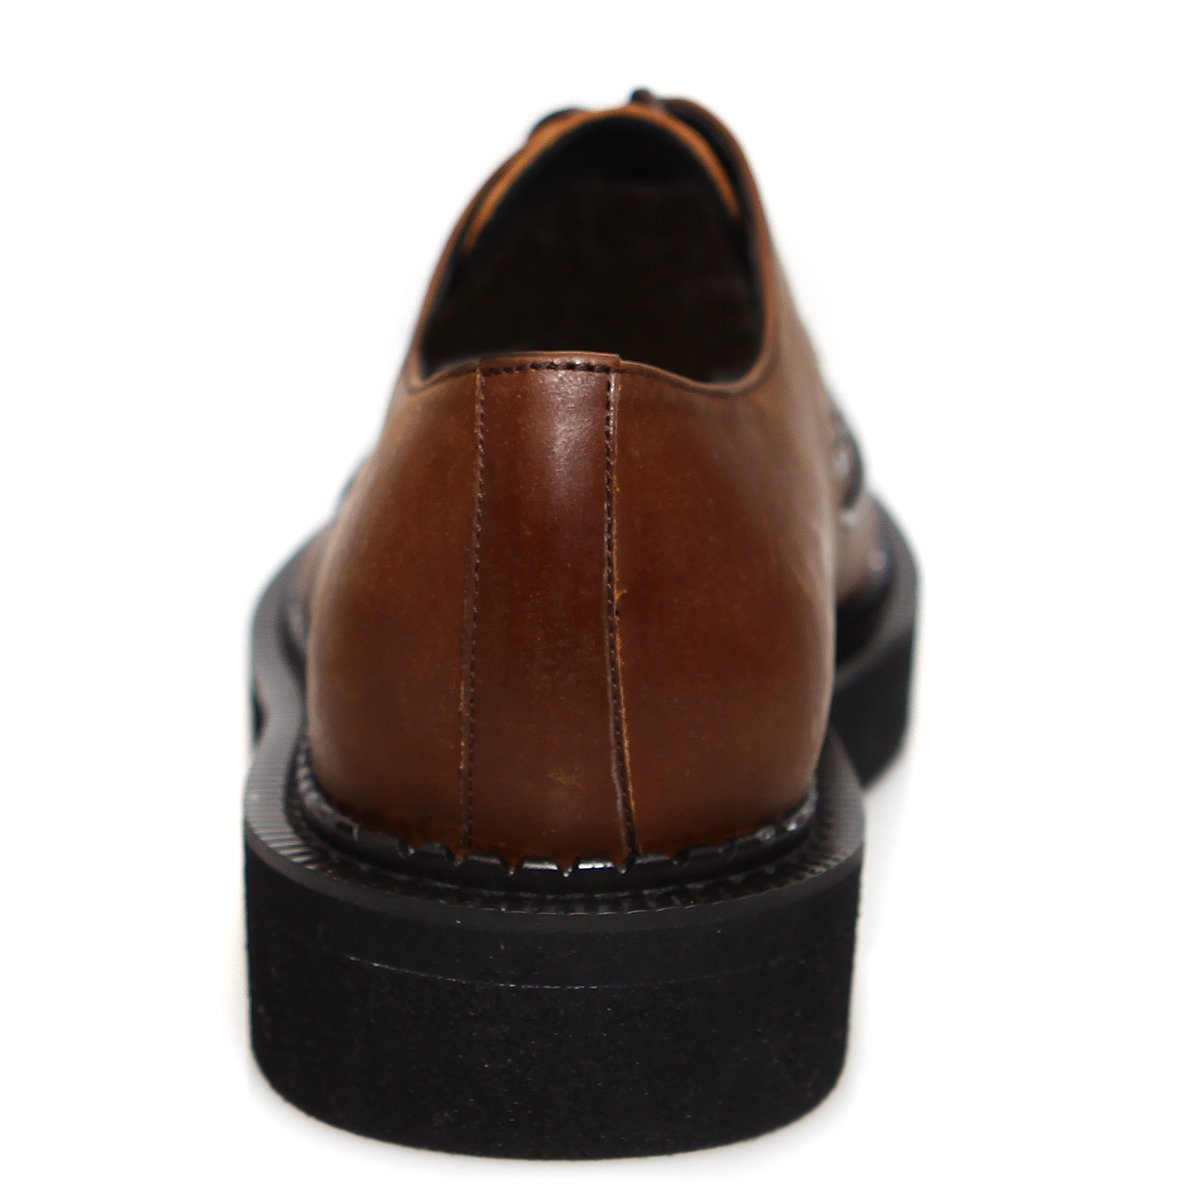 GENTLERSHOP Men's Handmade Brown Leather Pointed Toe Blown Sole Creepers 1069 